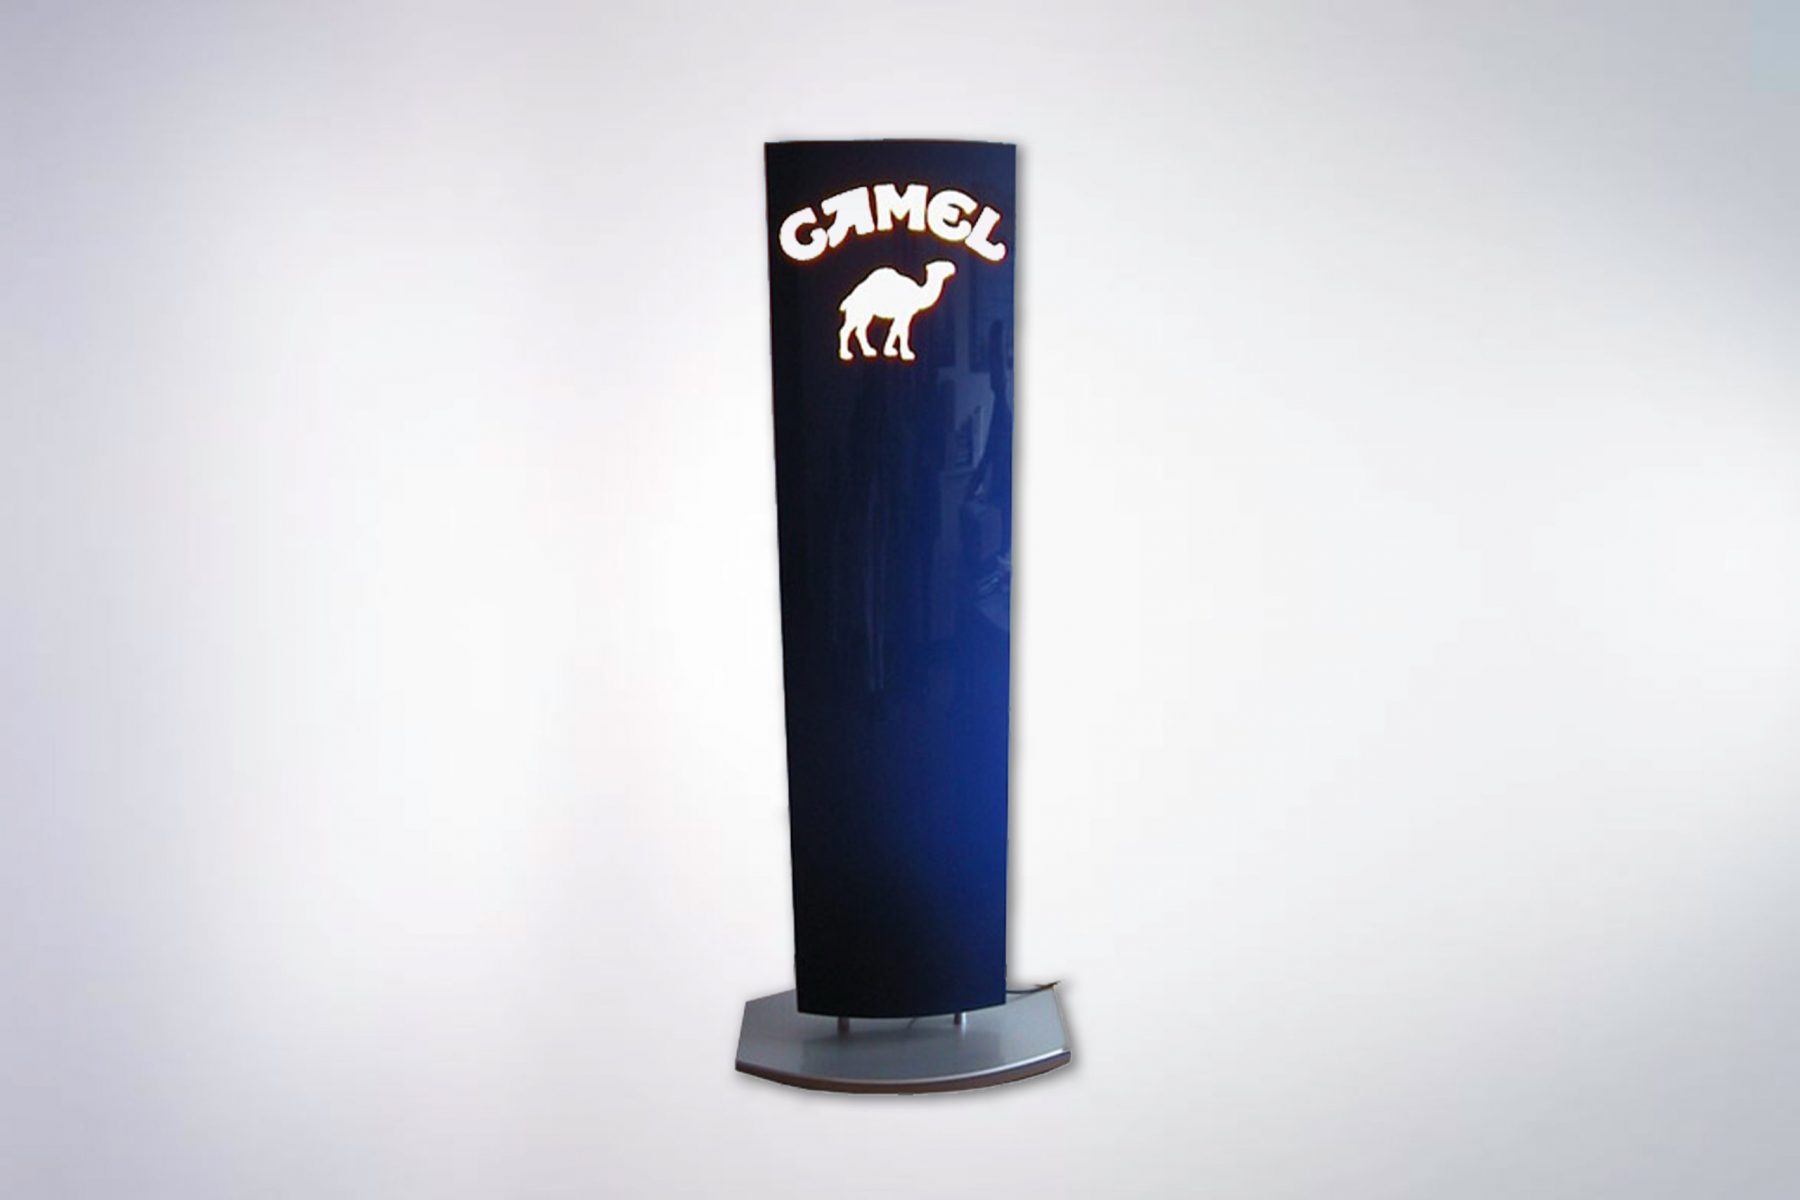 Camel-Leuchtstelle-scaled